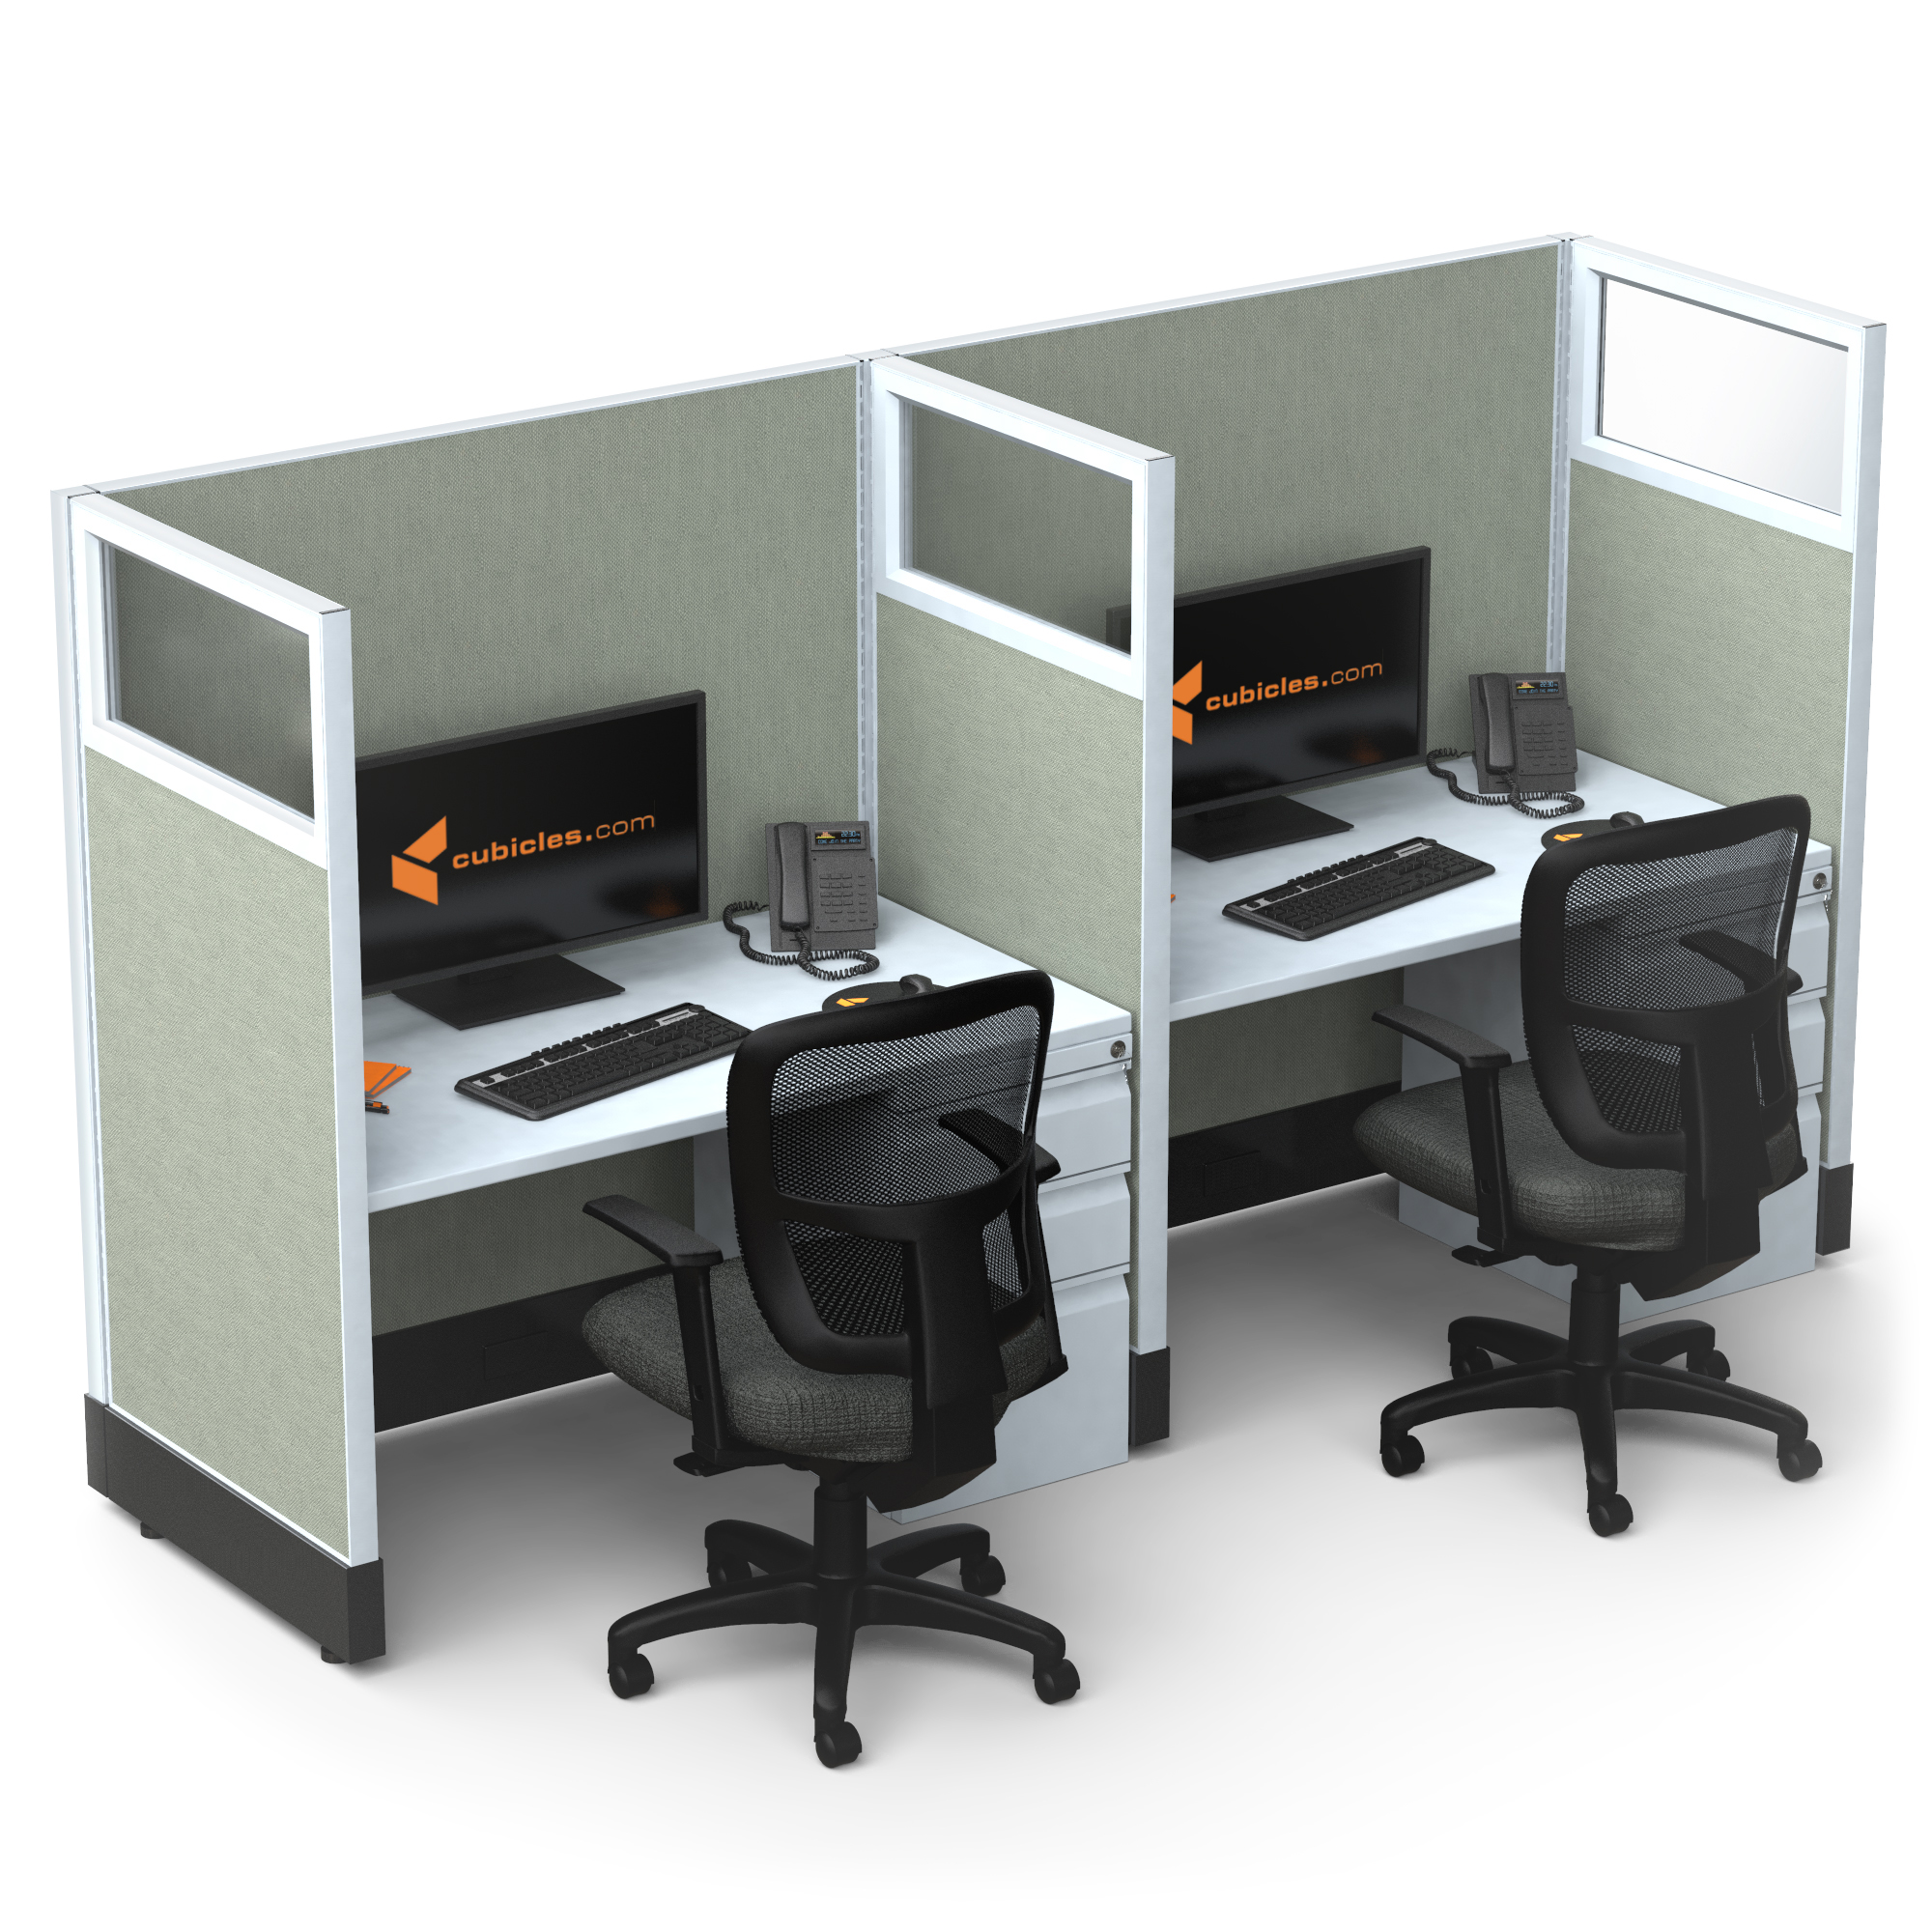 Hot desking cubicle workstations 2i pack powered